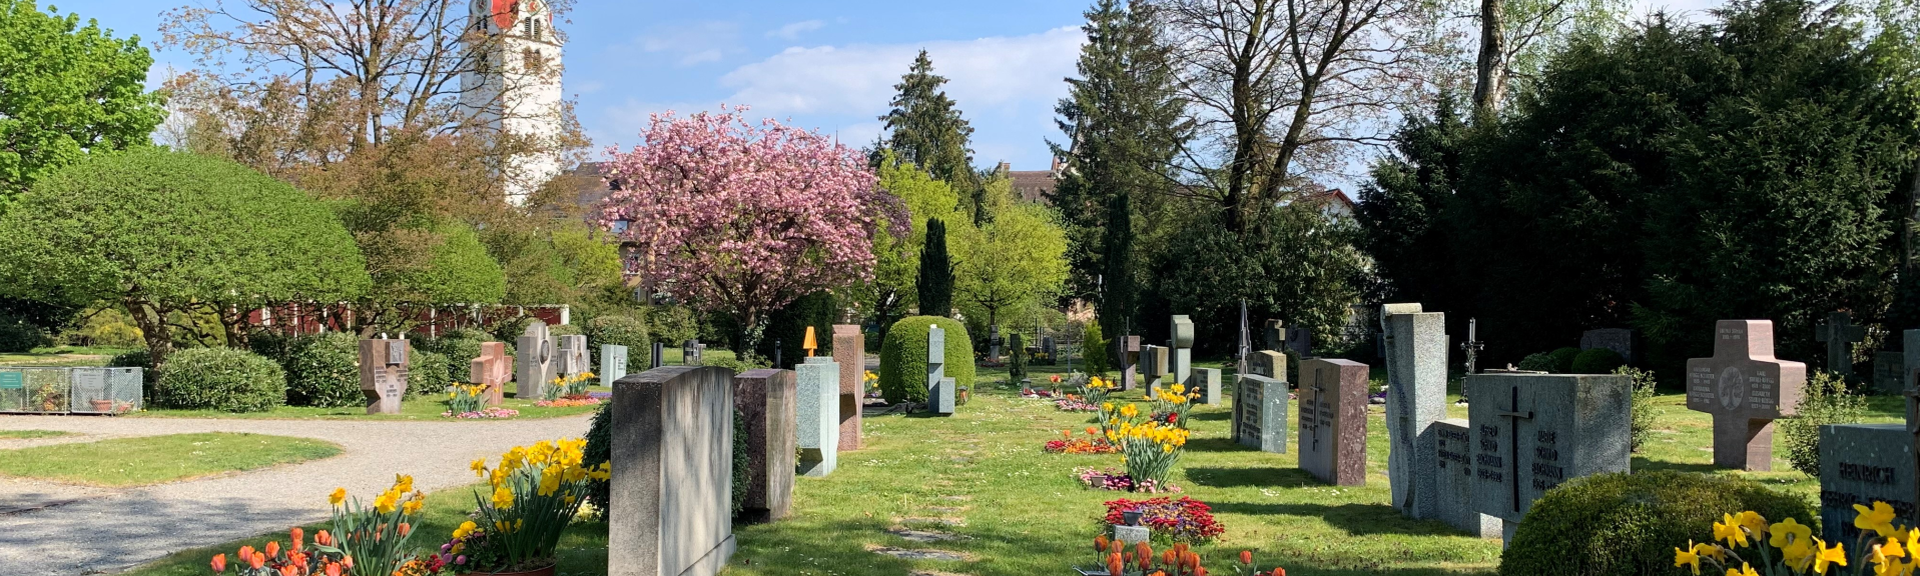 Blick zu den Familiengräber auf dem Friedhof Bremgarten